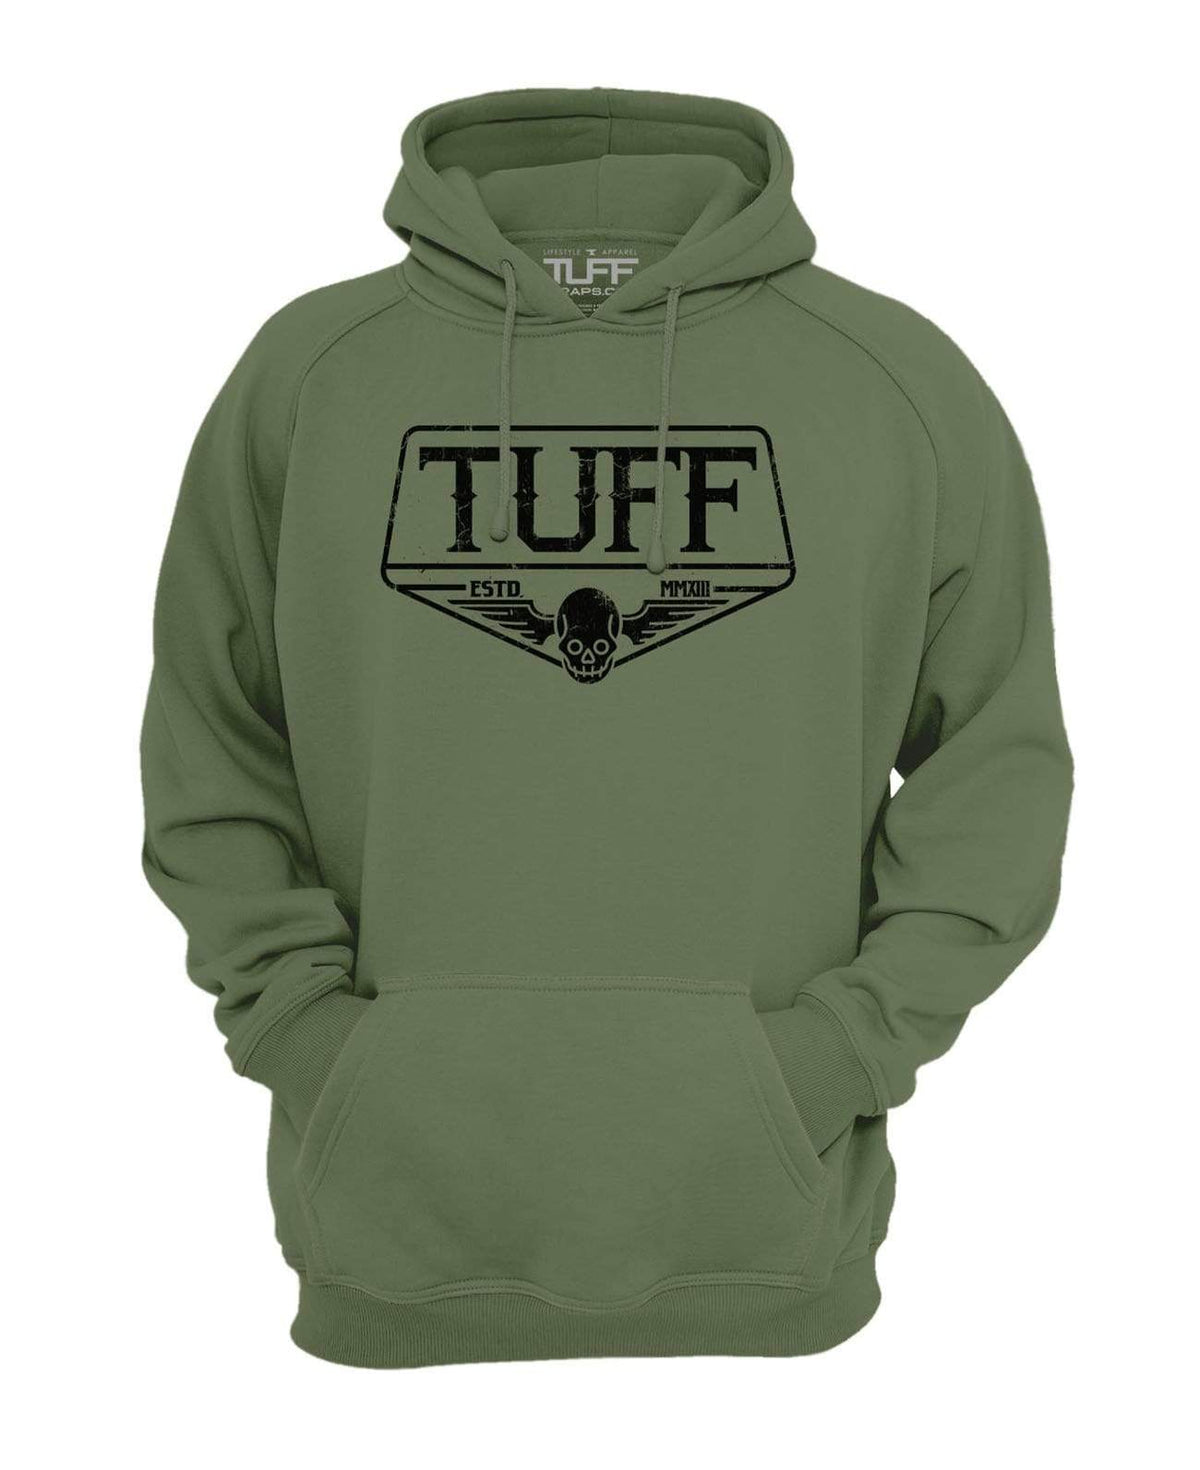 TUFF Skull Wings Hooded Sweatshirt XS / Military Green TuffWraps.com